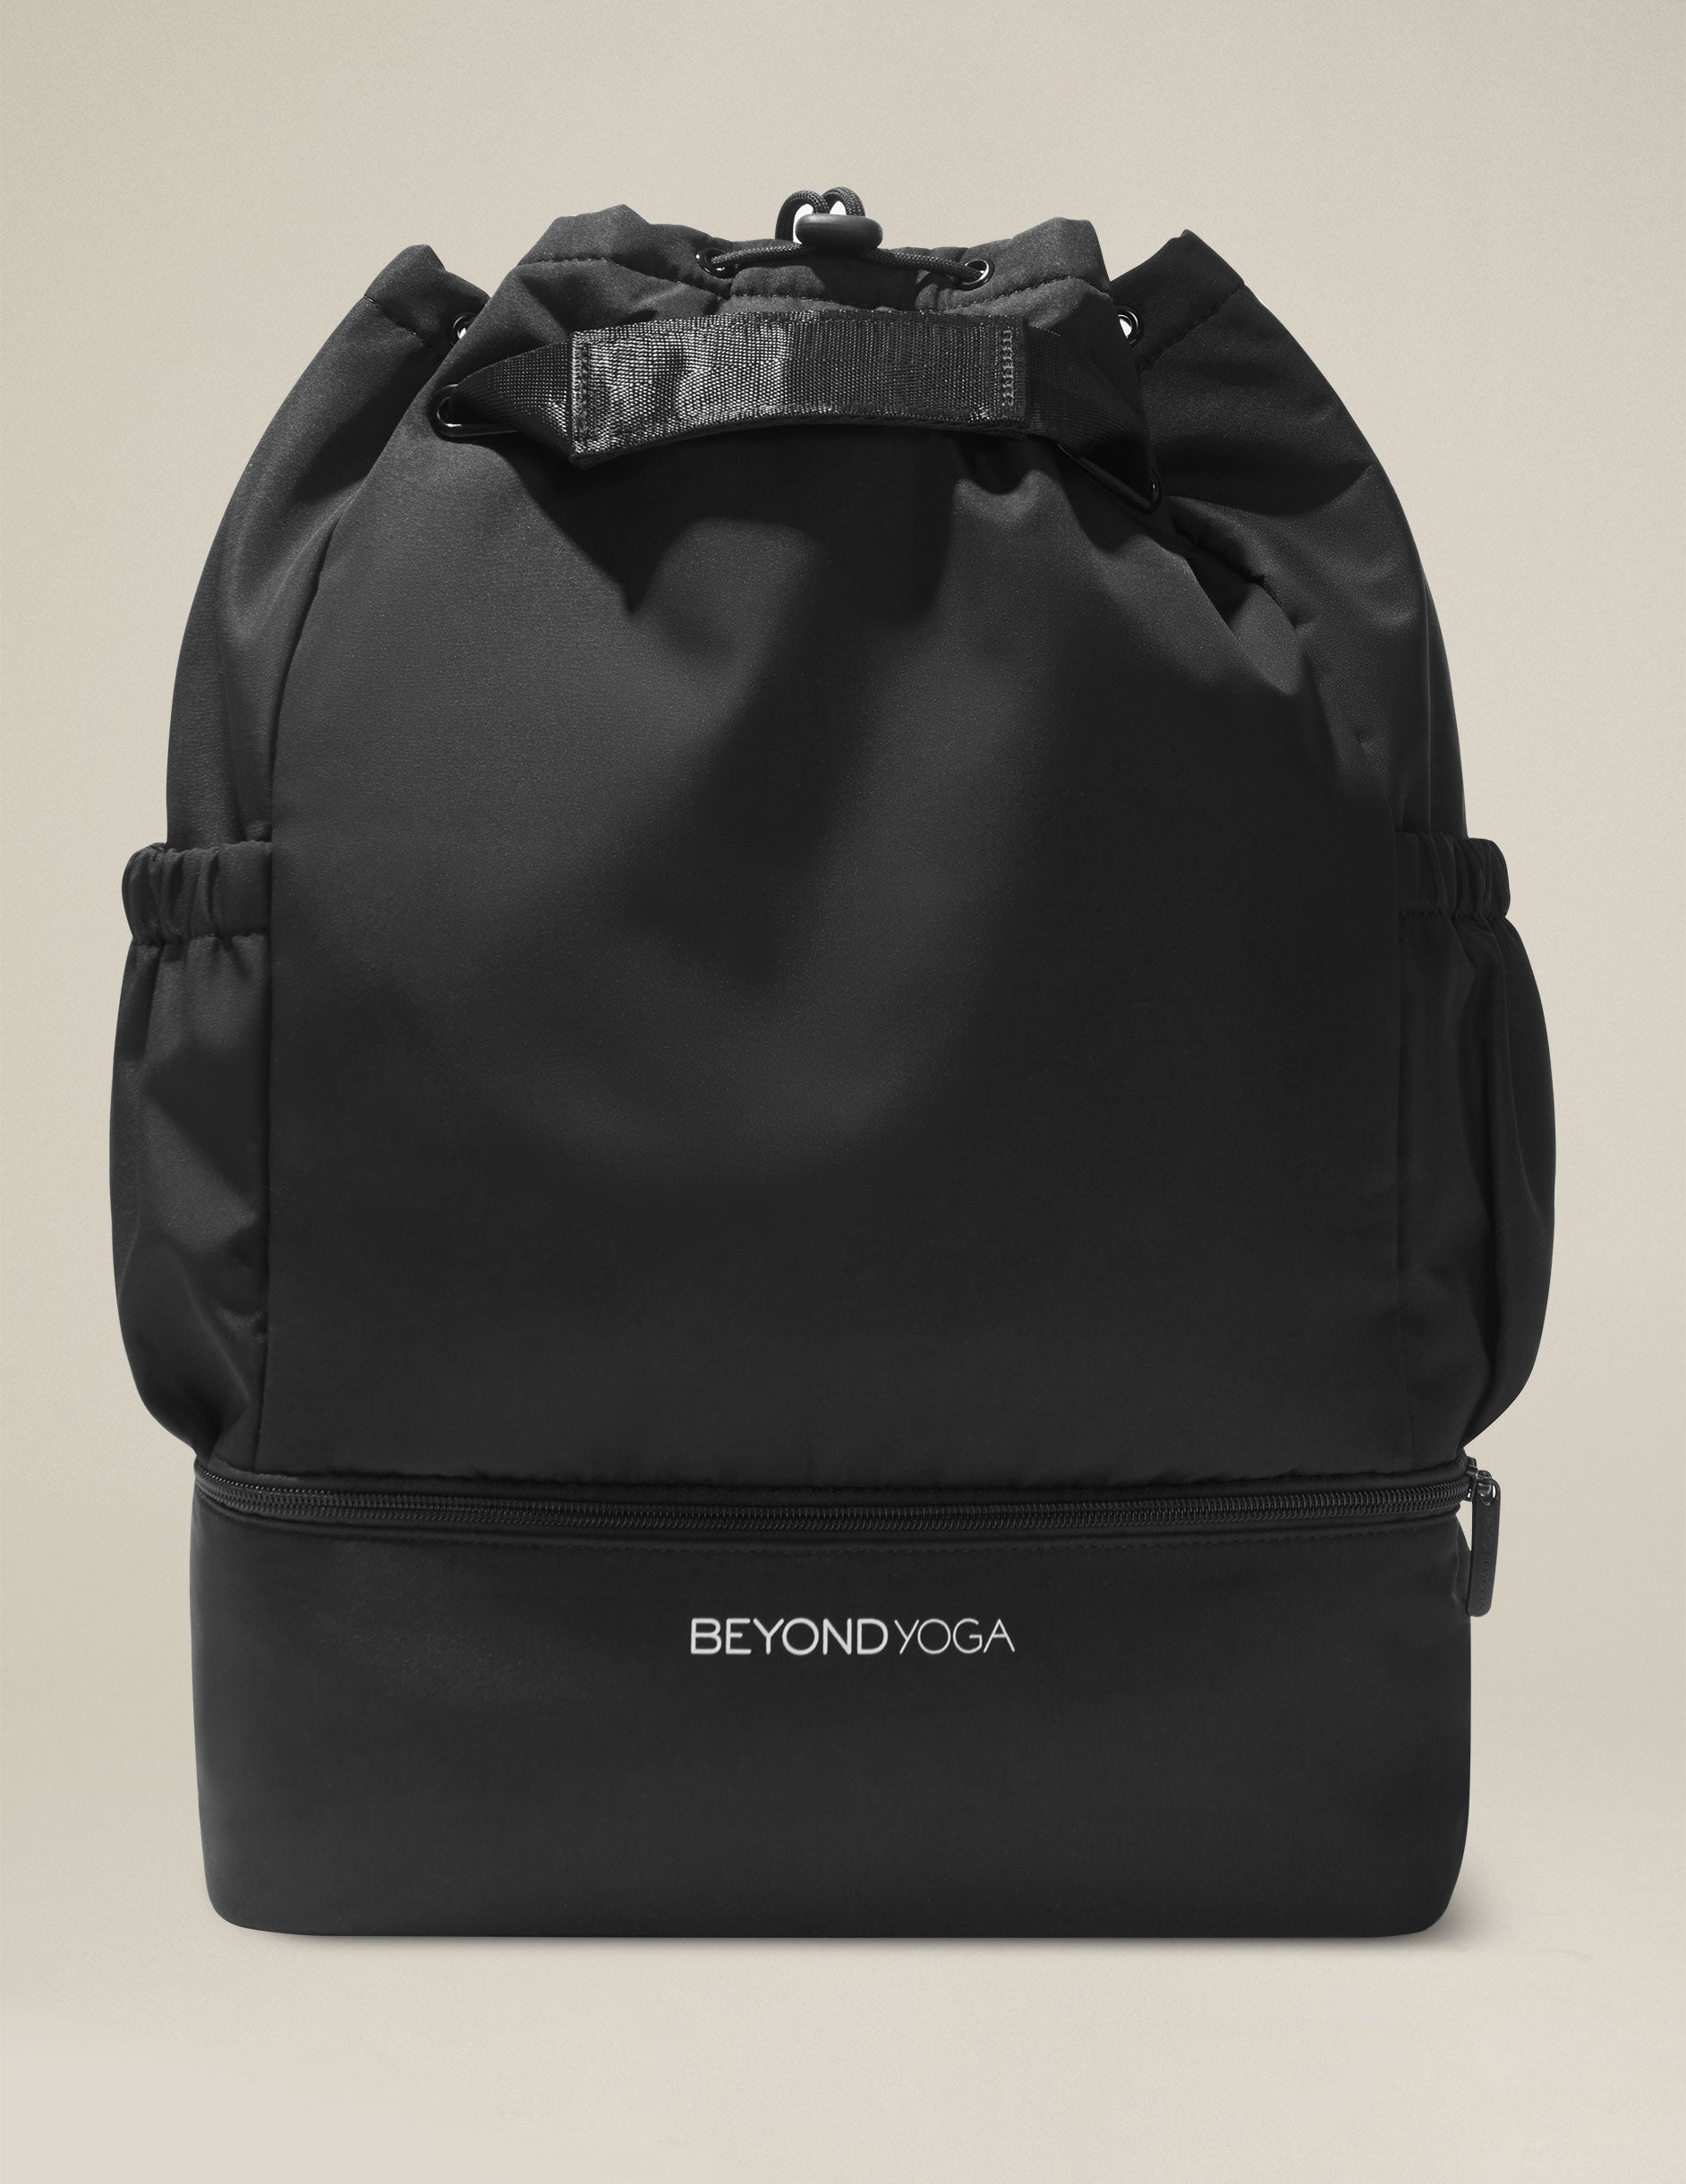 NEW Black Drawstring Beyond Yoga NEW Black Convertible Gym Bag